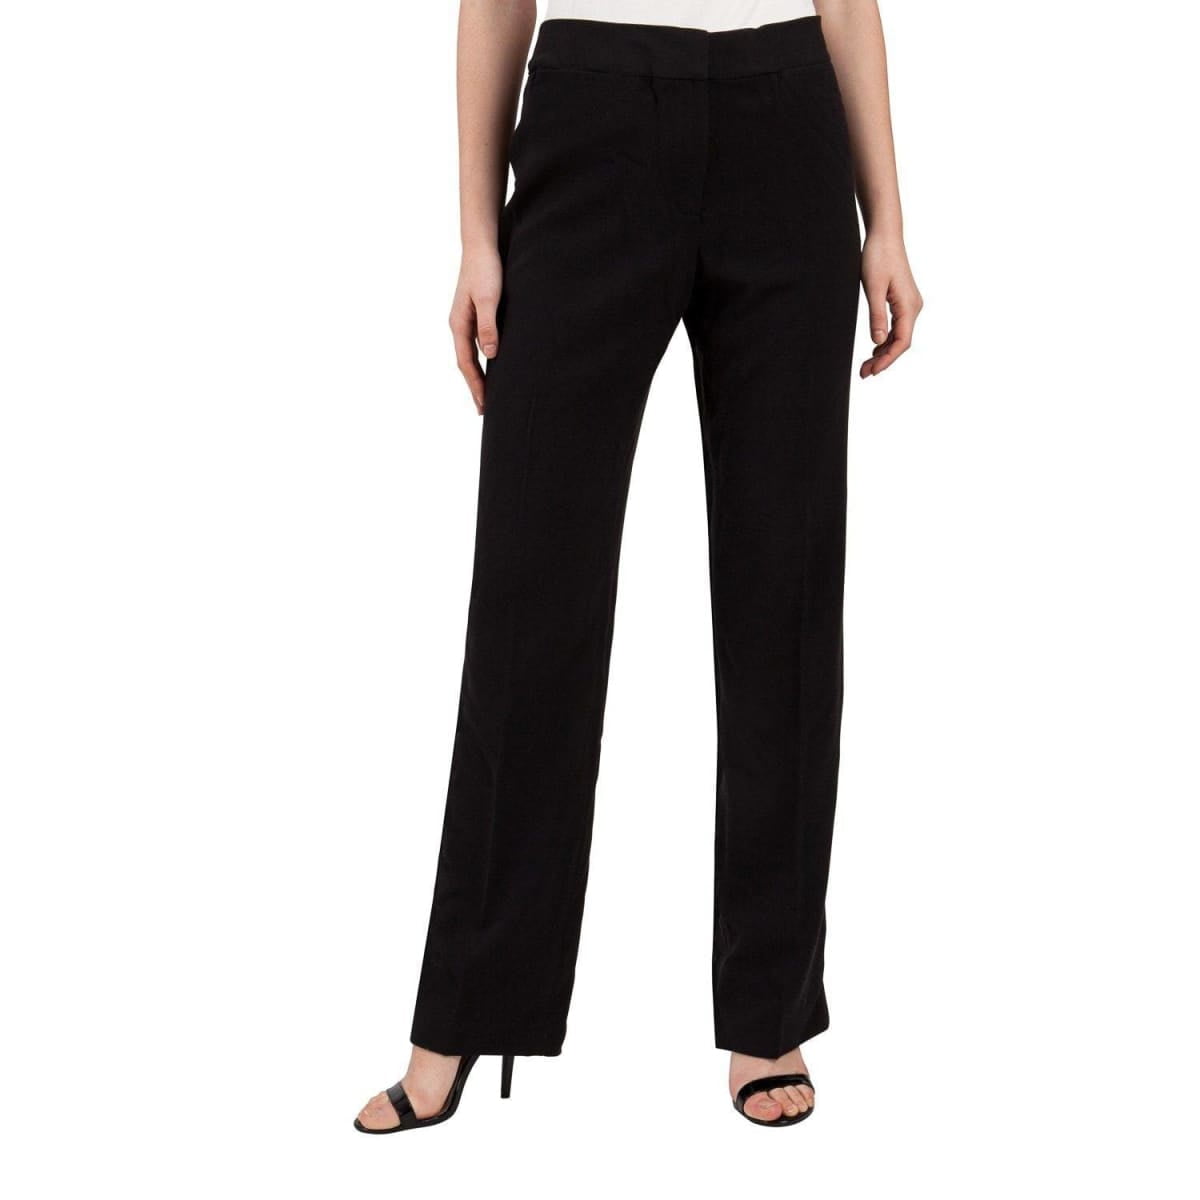 Betabrand Dress Pant Yoga Pants Womens Black Straight, Petite M - NWT | eBay